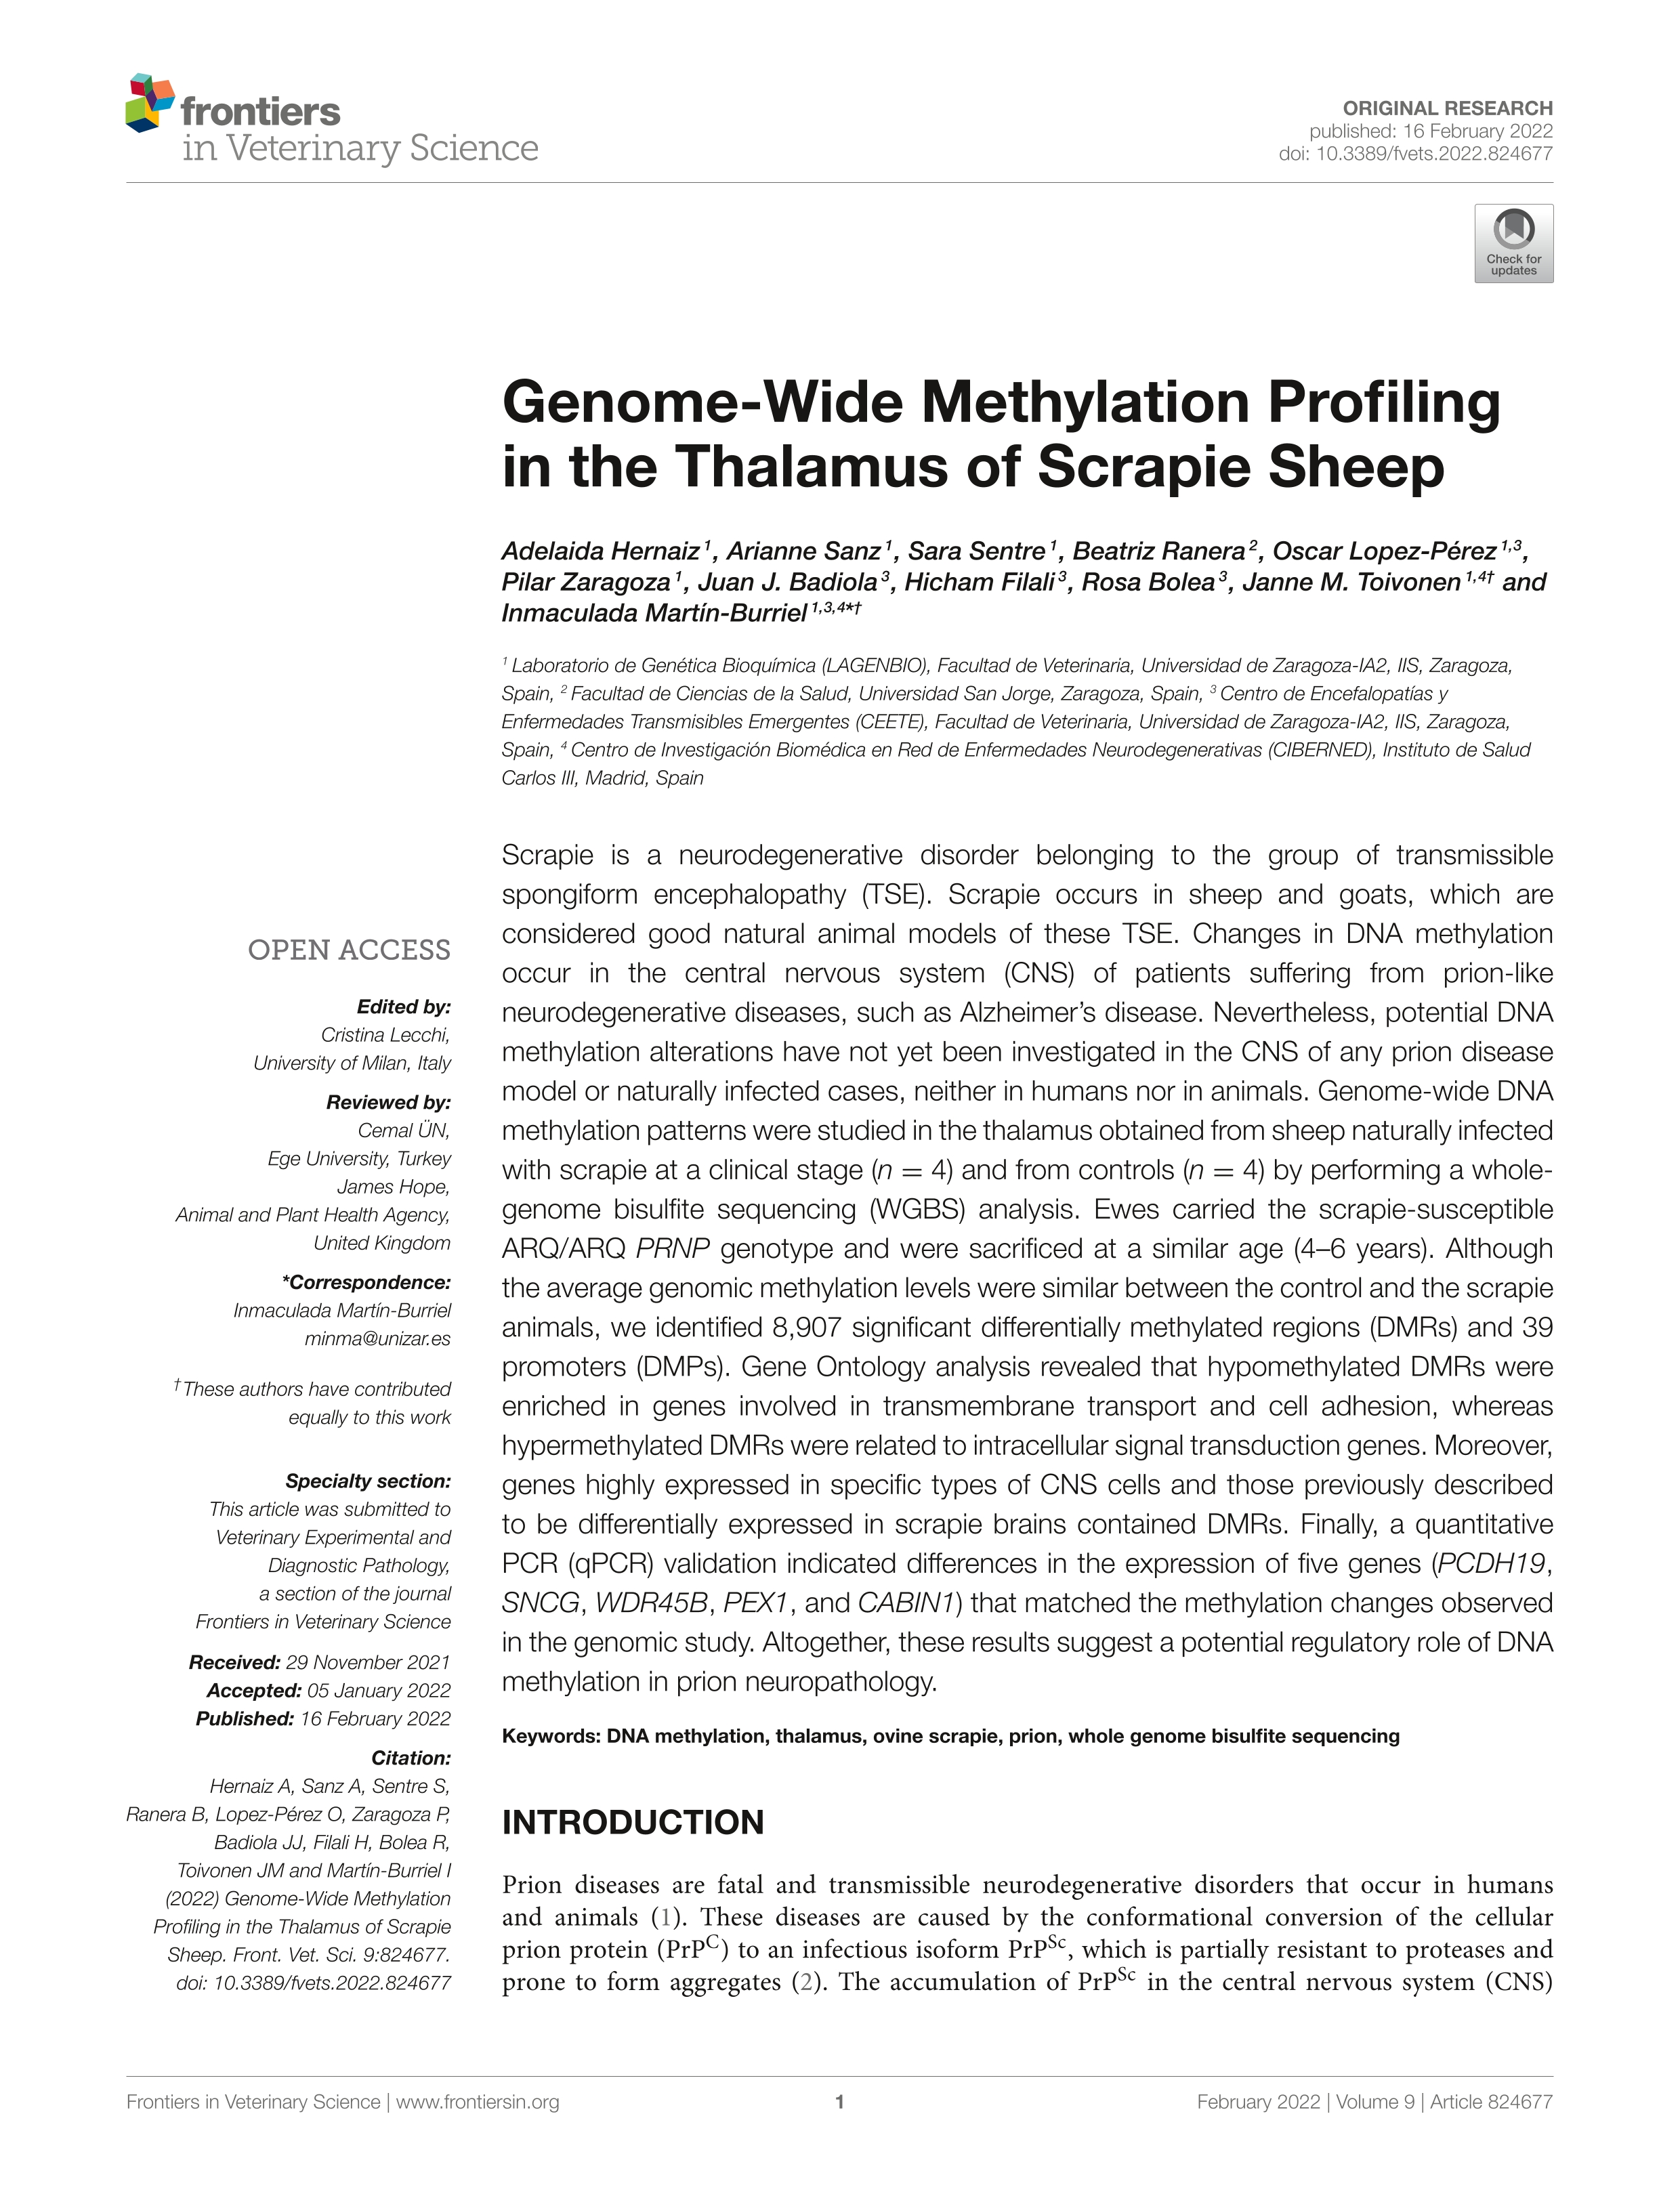 Genome-Wide Methylation Profiling in the Thalamus of Scrapie Sheep